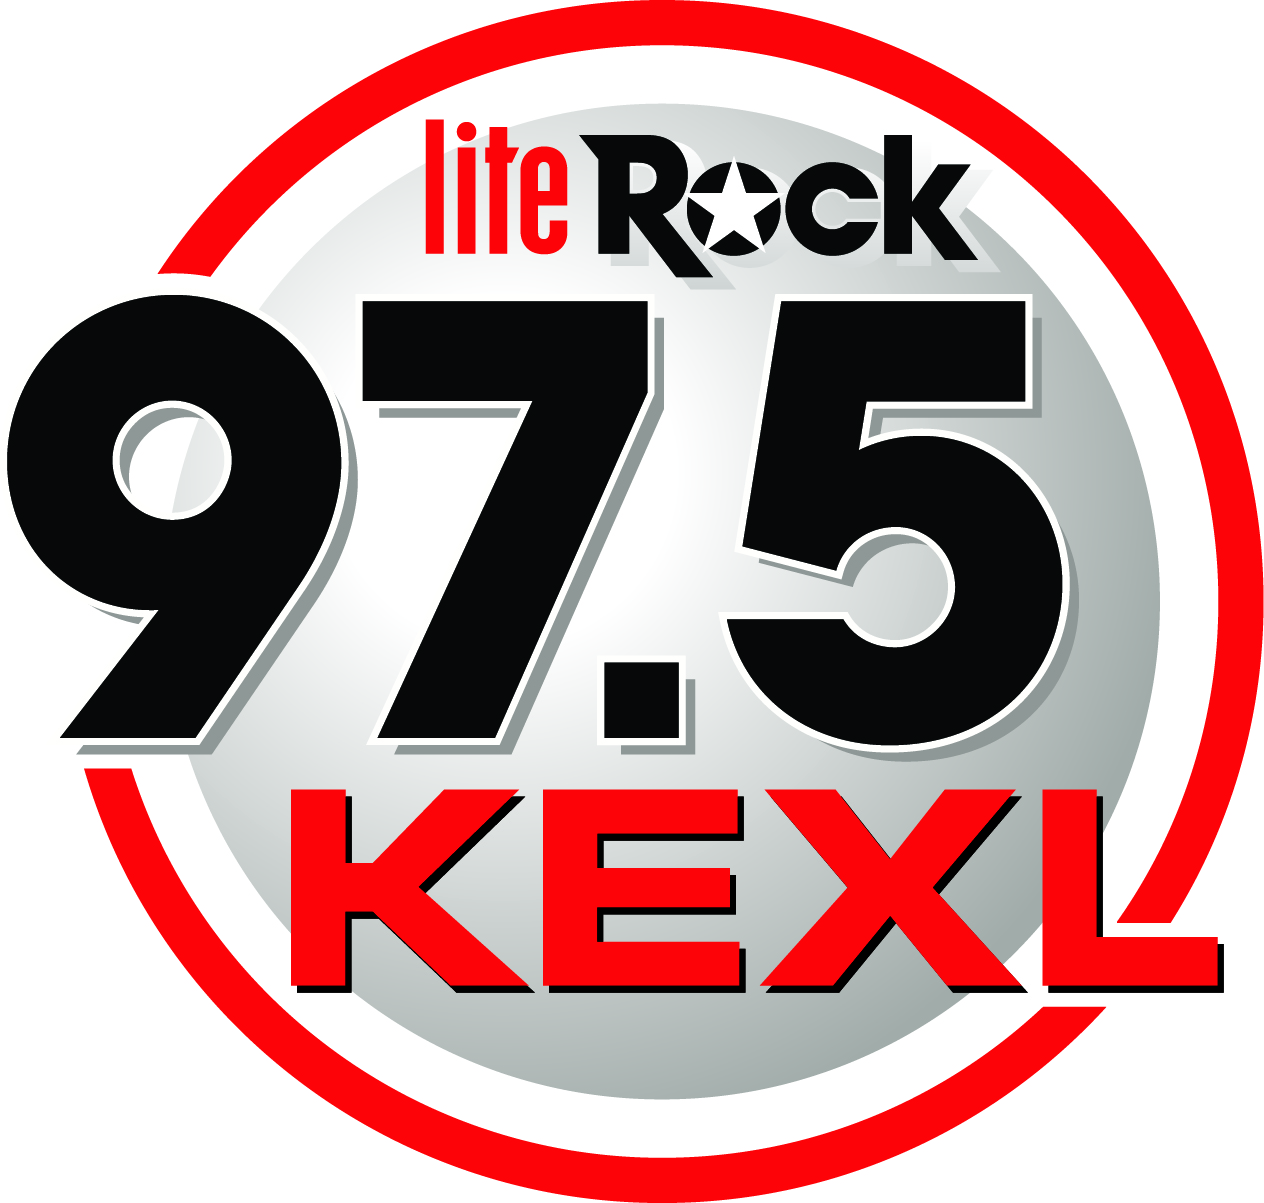 KEXL-FM